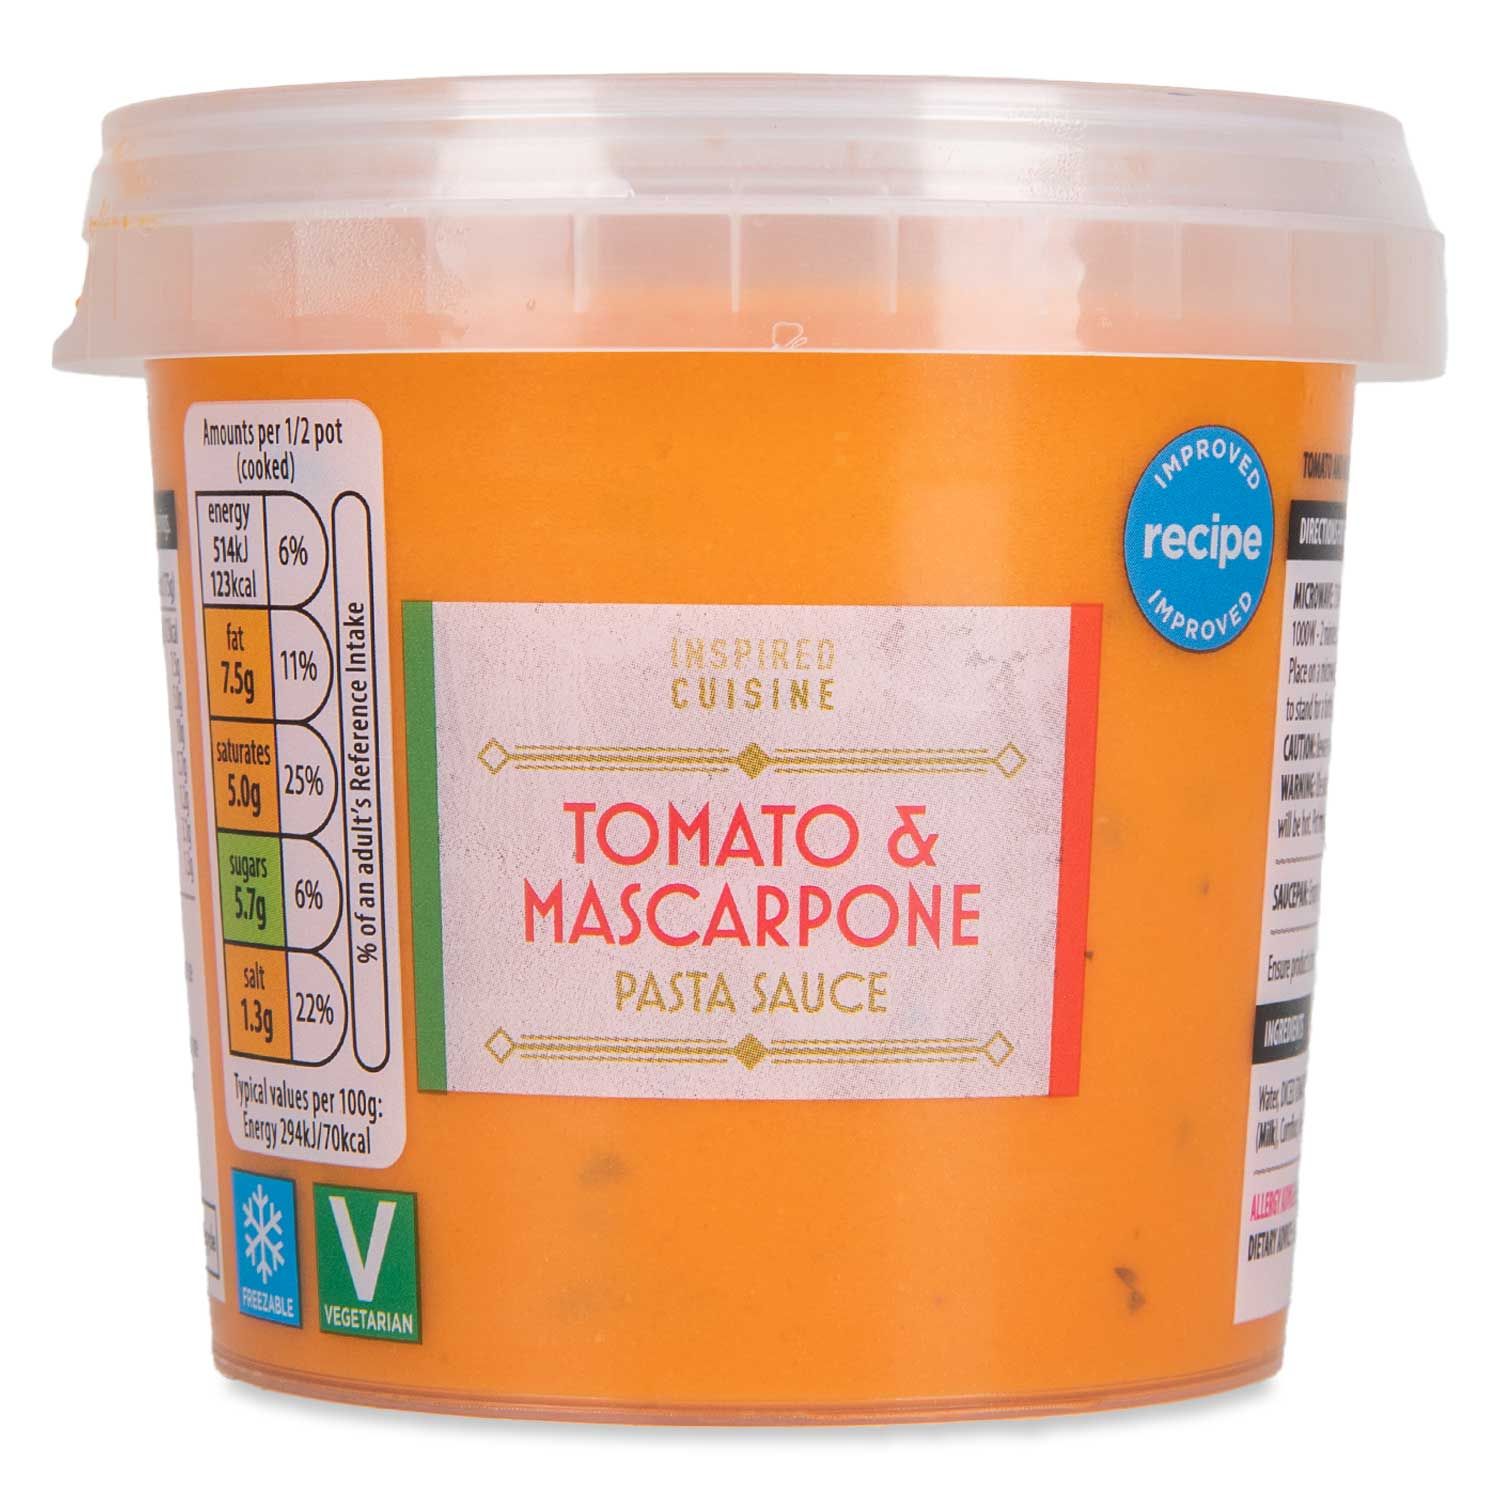 Tomato & Mascarpone Pasta Sauce 350g Inspired Cuisine 